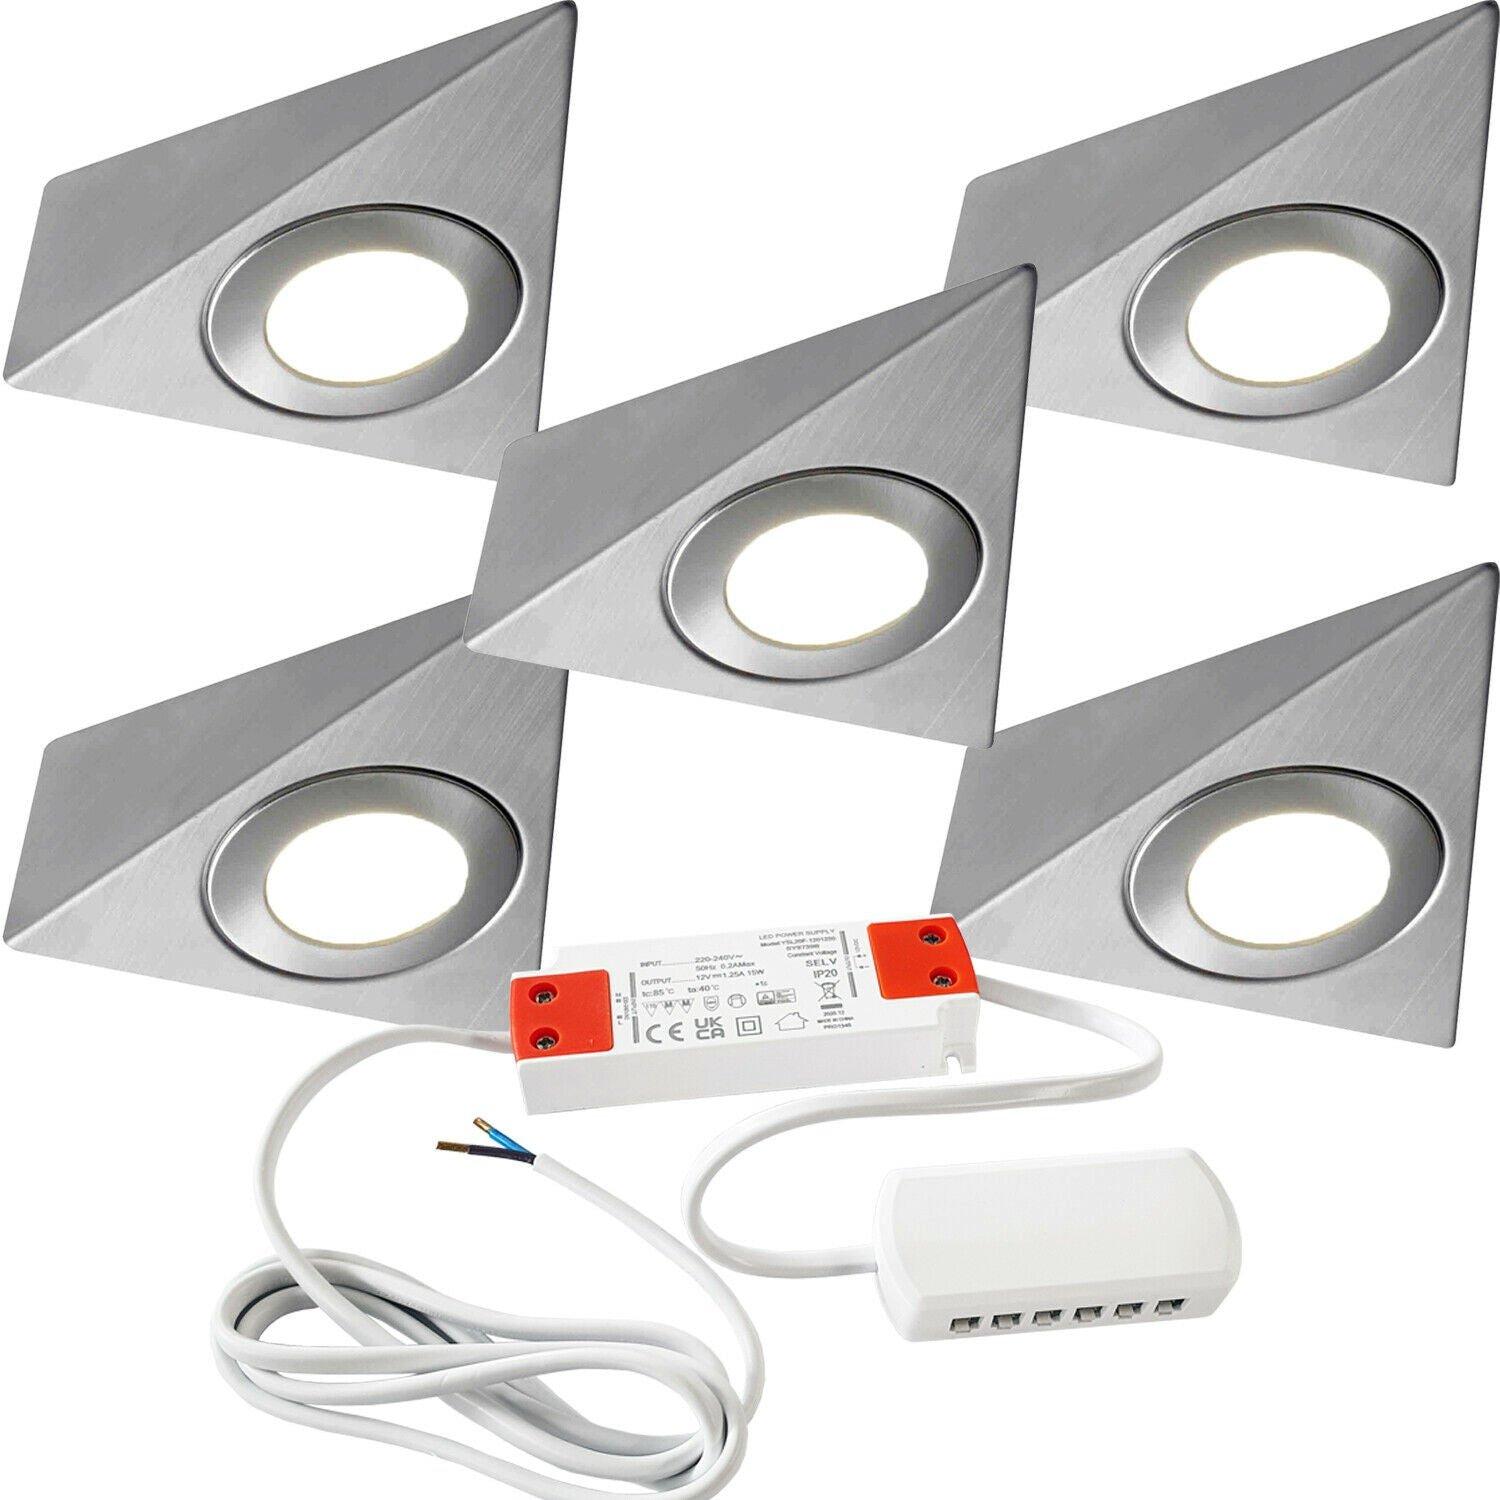 5x BRUSHED NICKEL Pyramid Surface Under Cabinet Kitchen Light & Driver Kit - Warm White LED